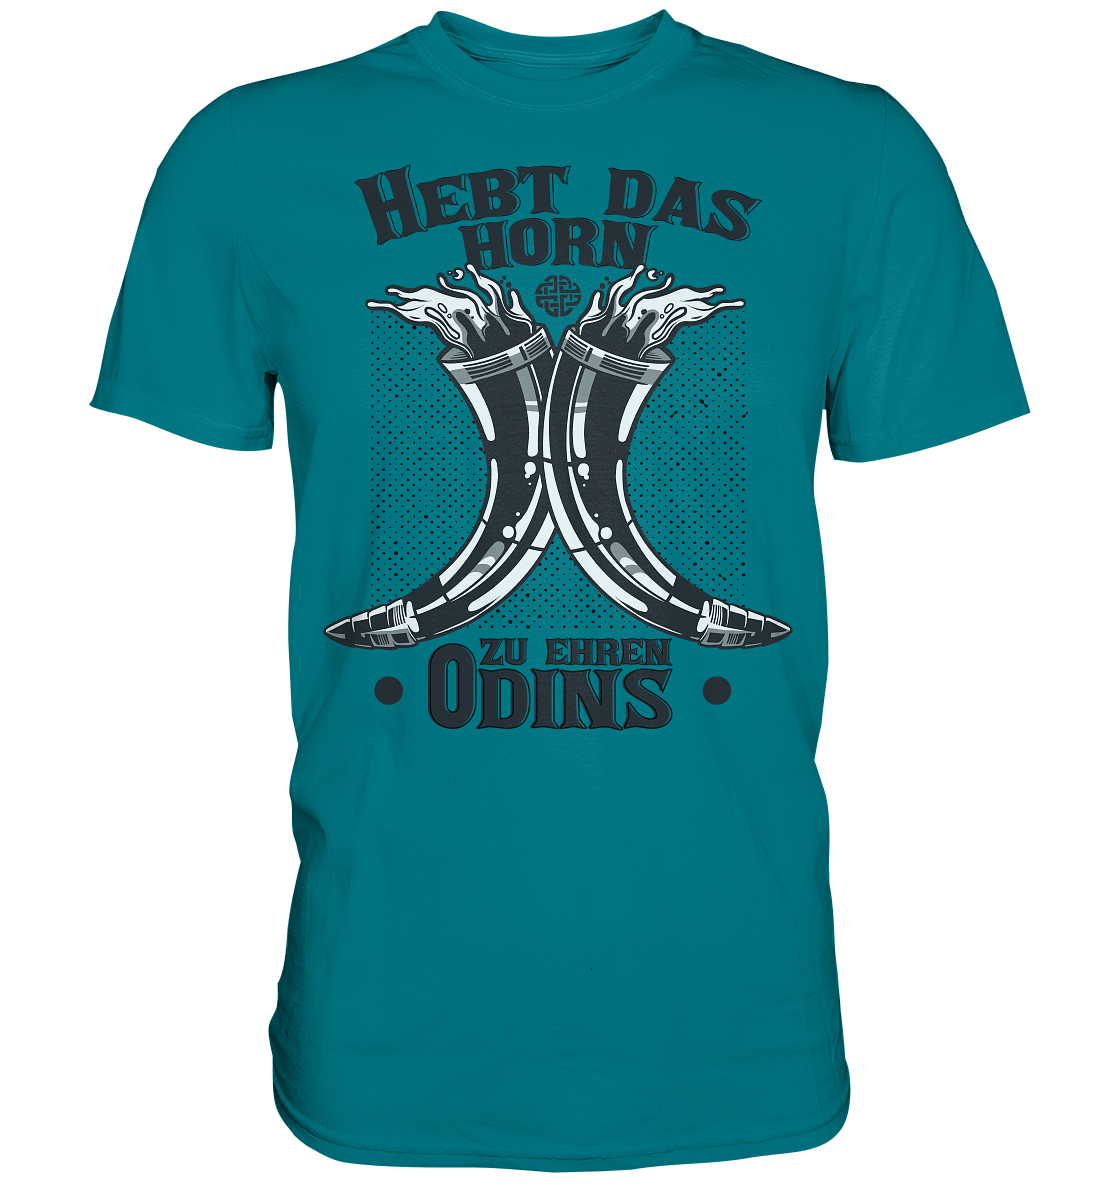 Hebt das Horn zu Ehren Odins - Premium Shirt